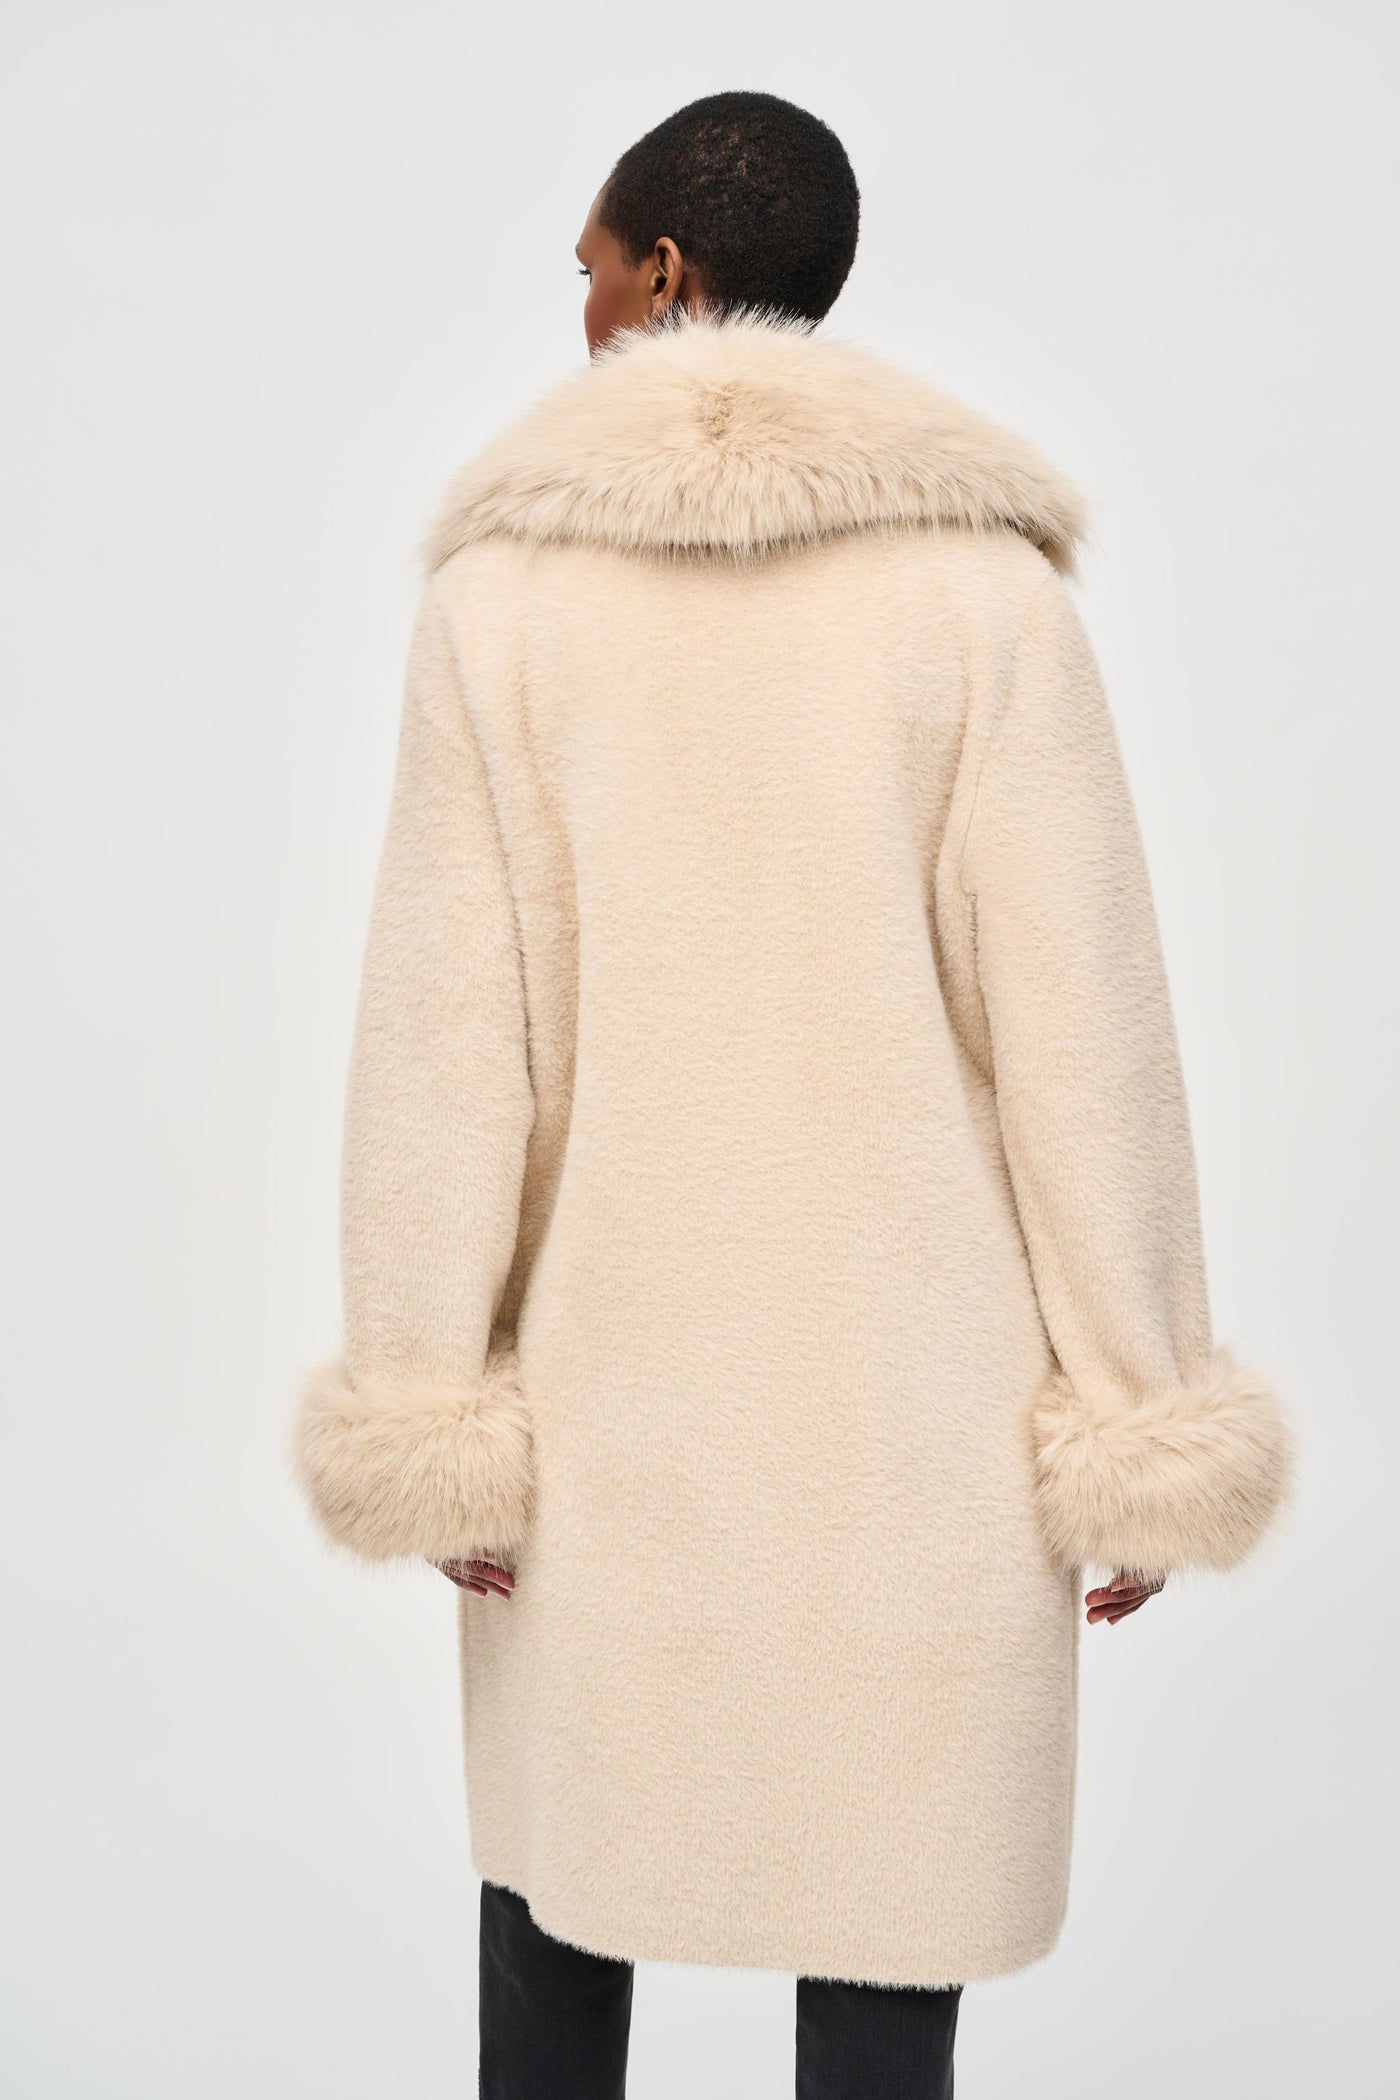 Feather Yarn and Faux Fur Sweater Coat Joseph Ribkoff